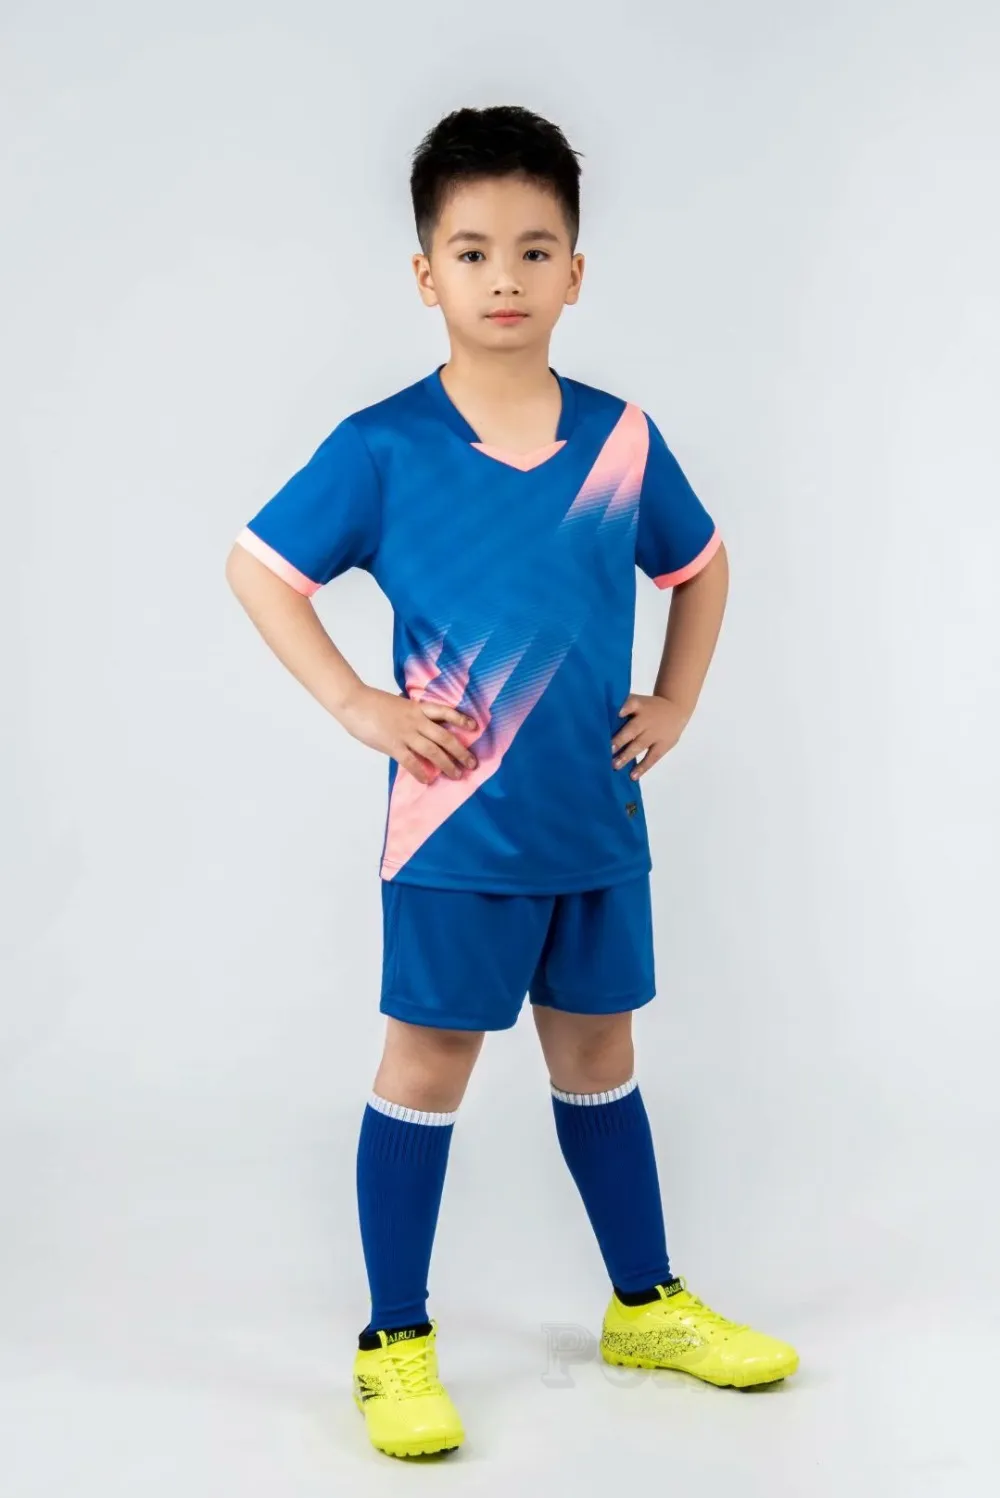 #GB01 Jessie store J4 Joorda Clothing Jerseys infantis atléticos ao ar livre